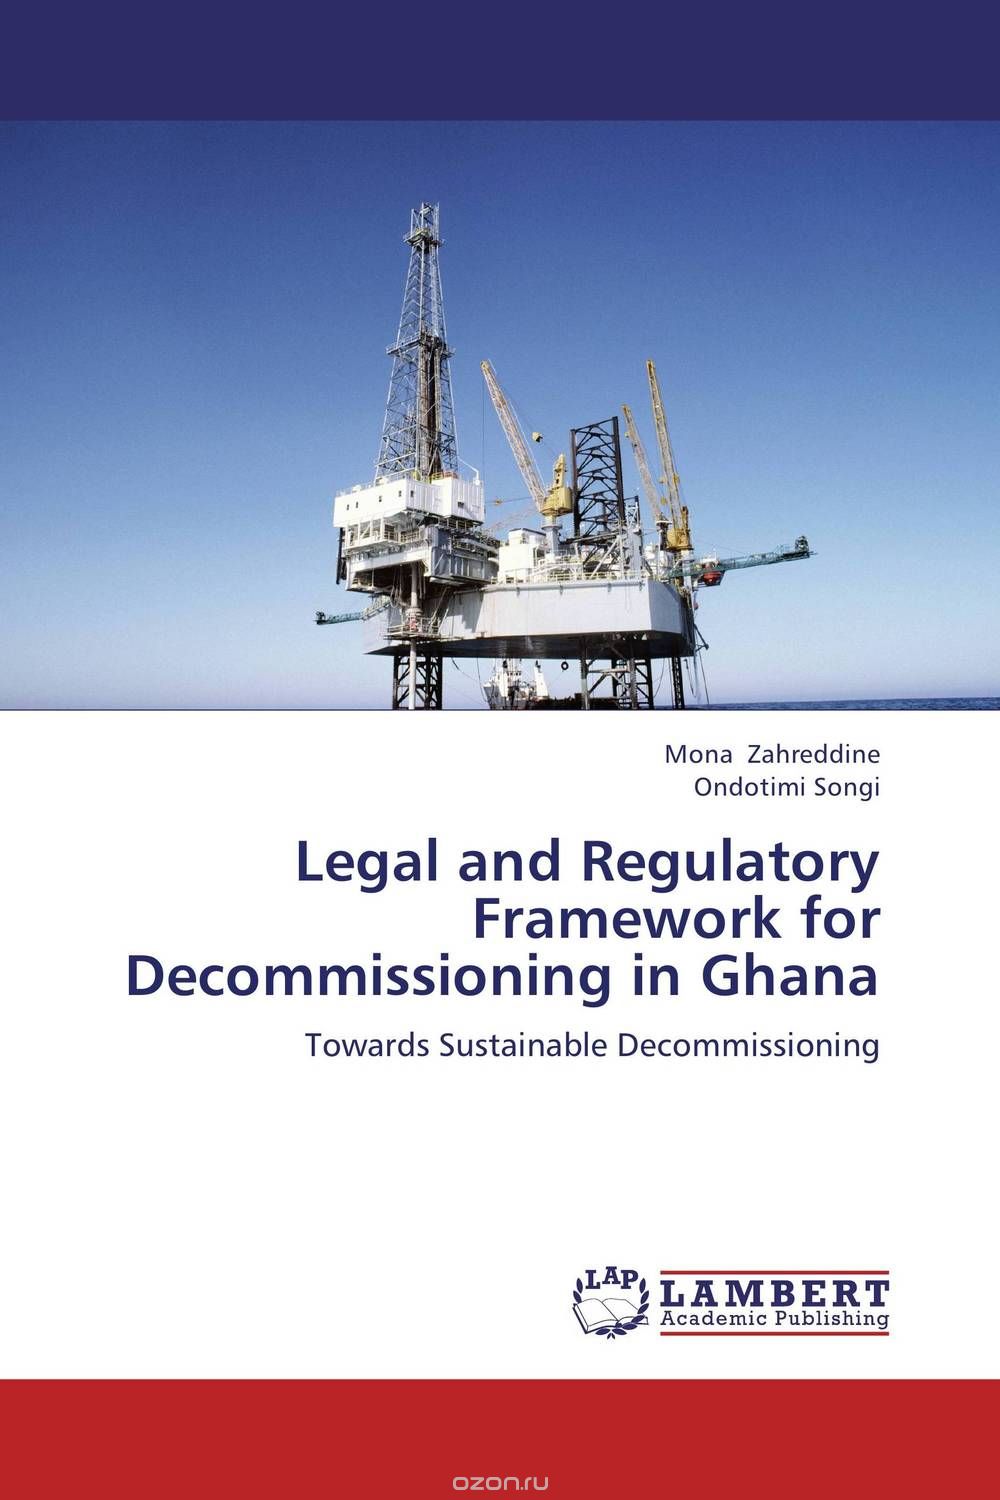 Скачать книгу "Legal and Regulatory Framework for Decommissioning in Ghana"